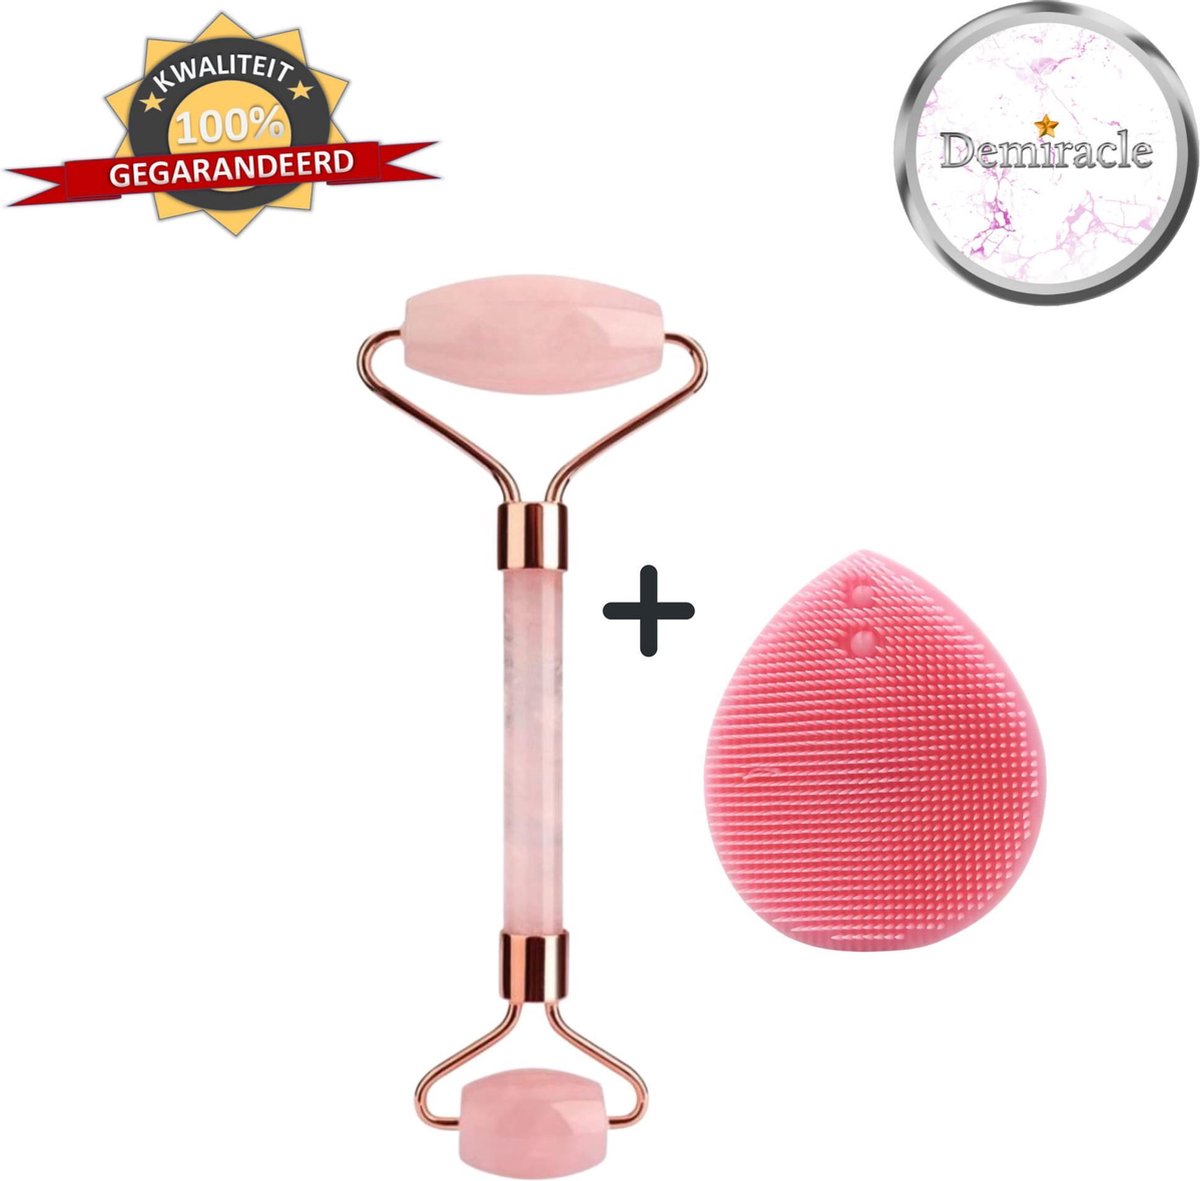 Demiracle Rose Quartz Face Roller met Roze Siliconen Gezichtsborstel - Valentijnsdag - Cadeau - Gezichtsroller - Massage Roller - Jade Roller - Rimpelverwijdering - Ontspanning - Kwaliteit